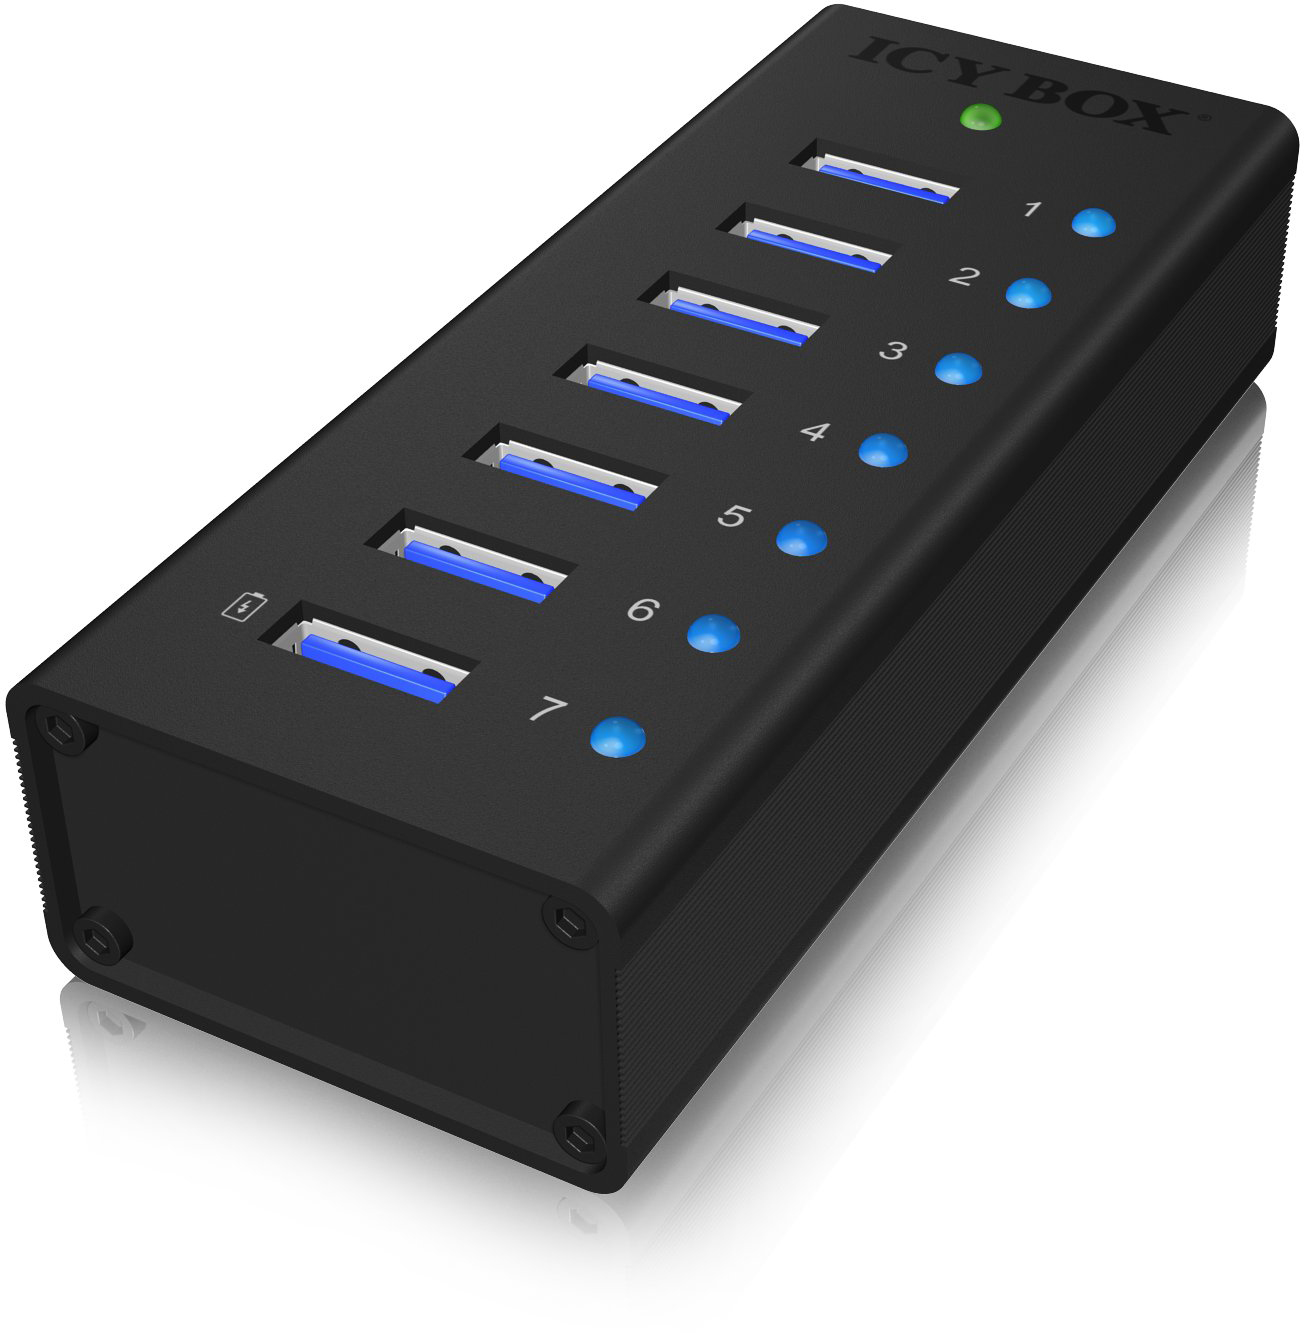 ICY BOX 7 Port Hub USB 3.0 IB-AC618 robust alluminium black